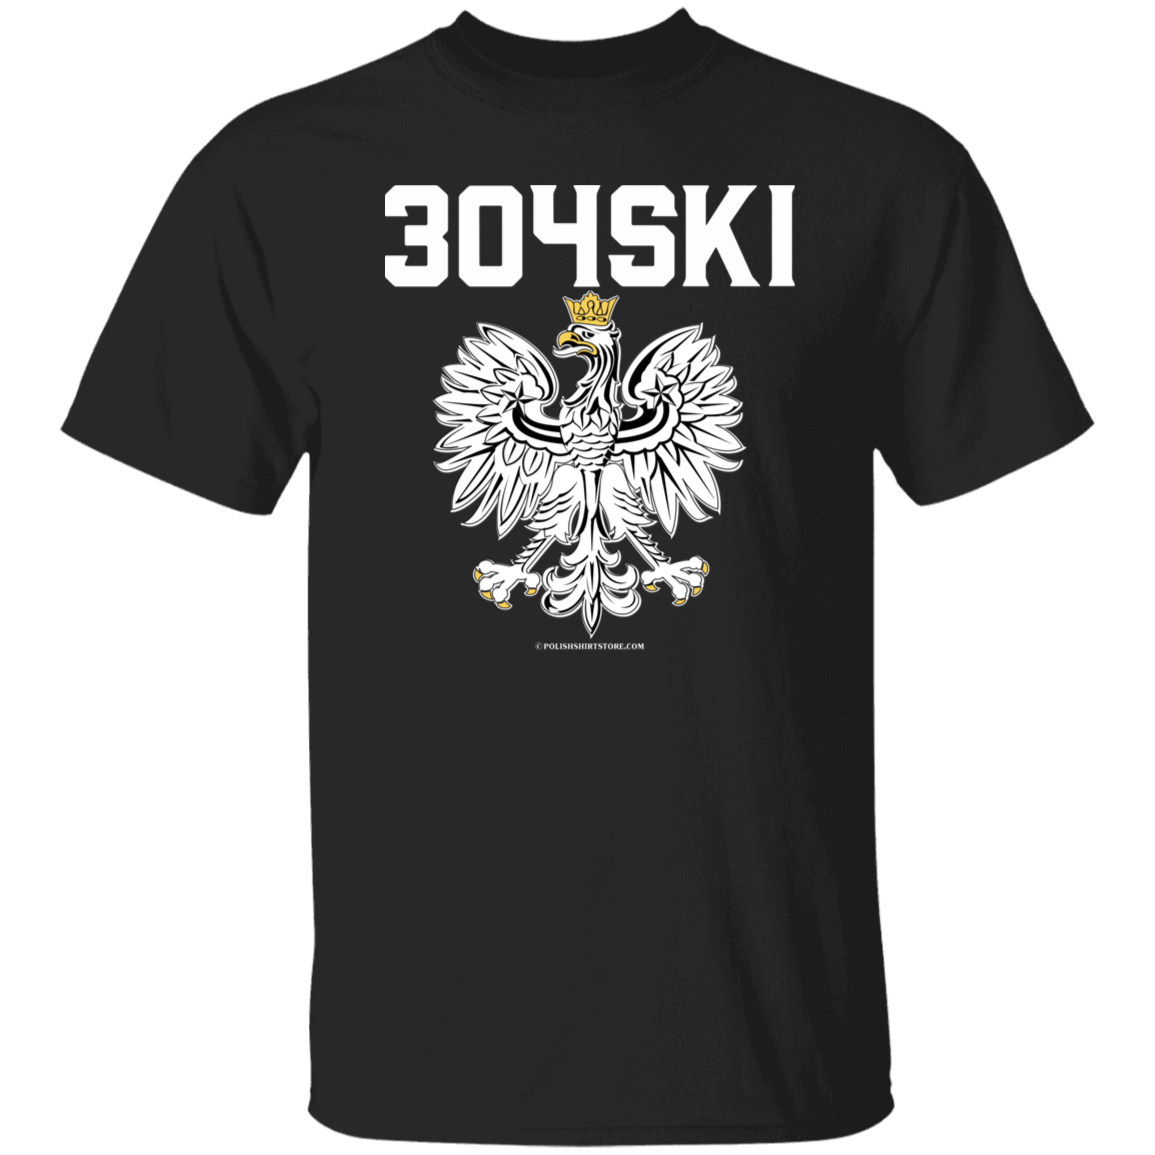 304SKI Apparel CustomCat G500 5.3 oz. T-Shirt Black S